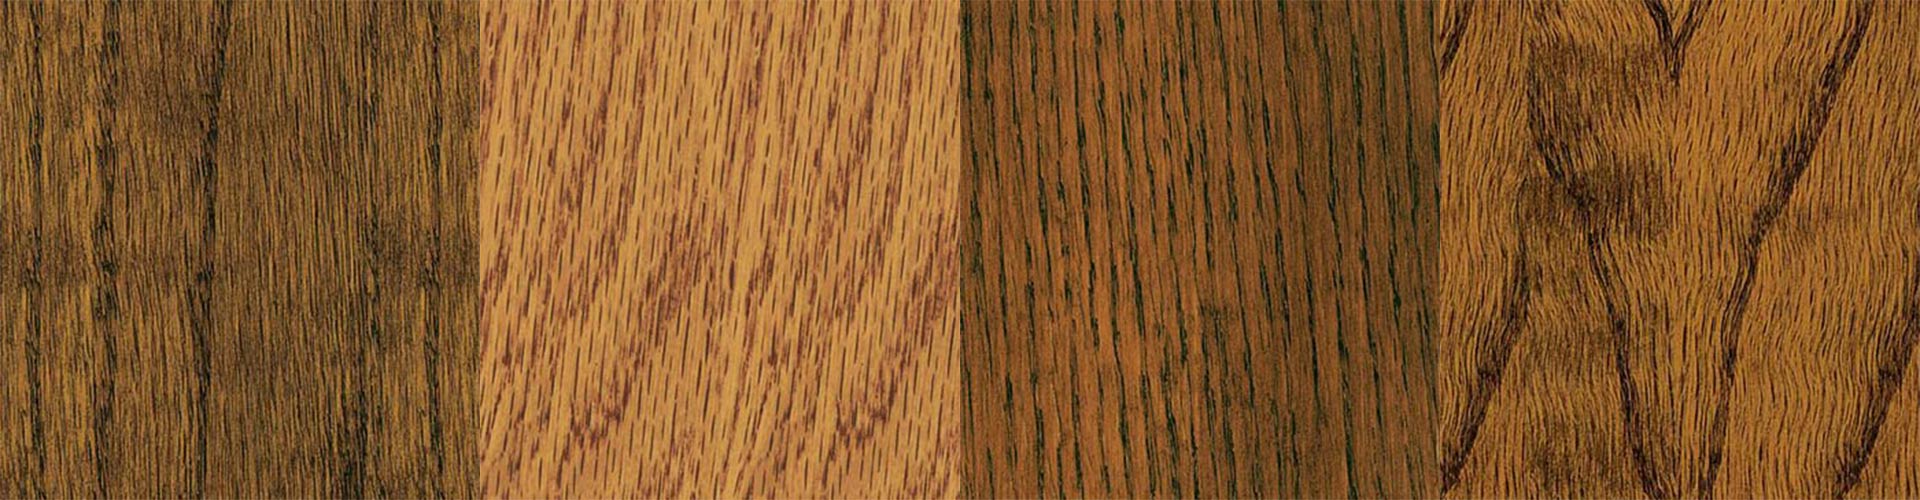 Custom Hardwood Flooring Stains by Ryno Custom Flooring Inc.